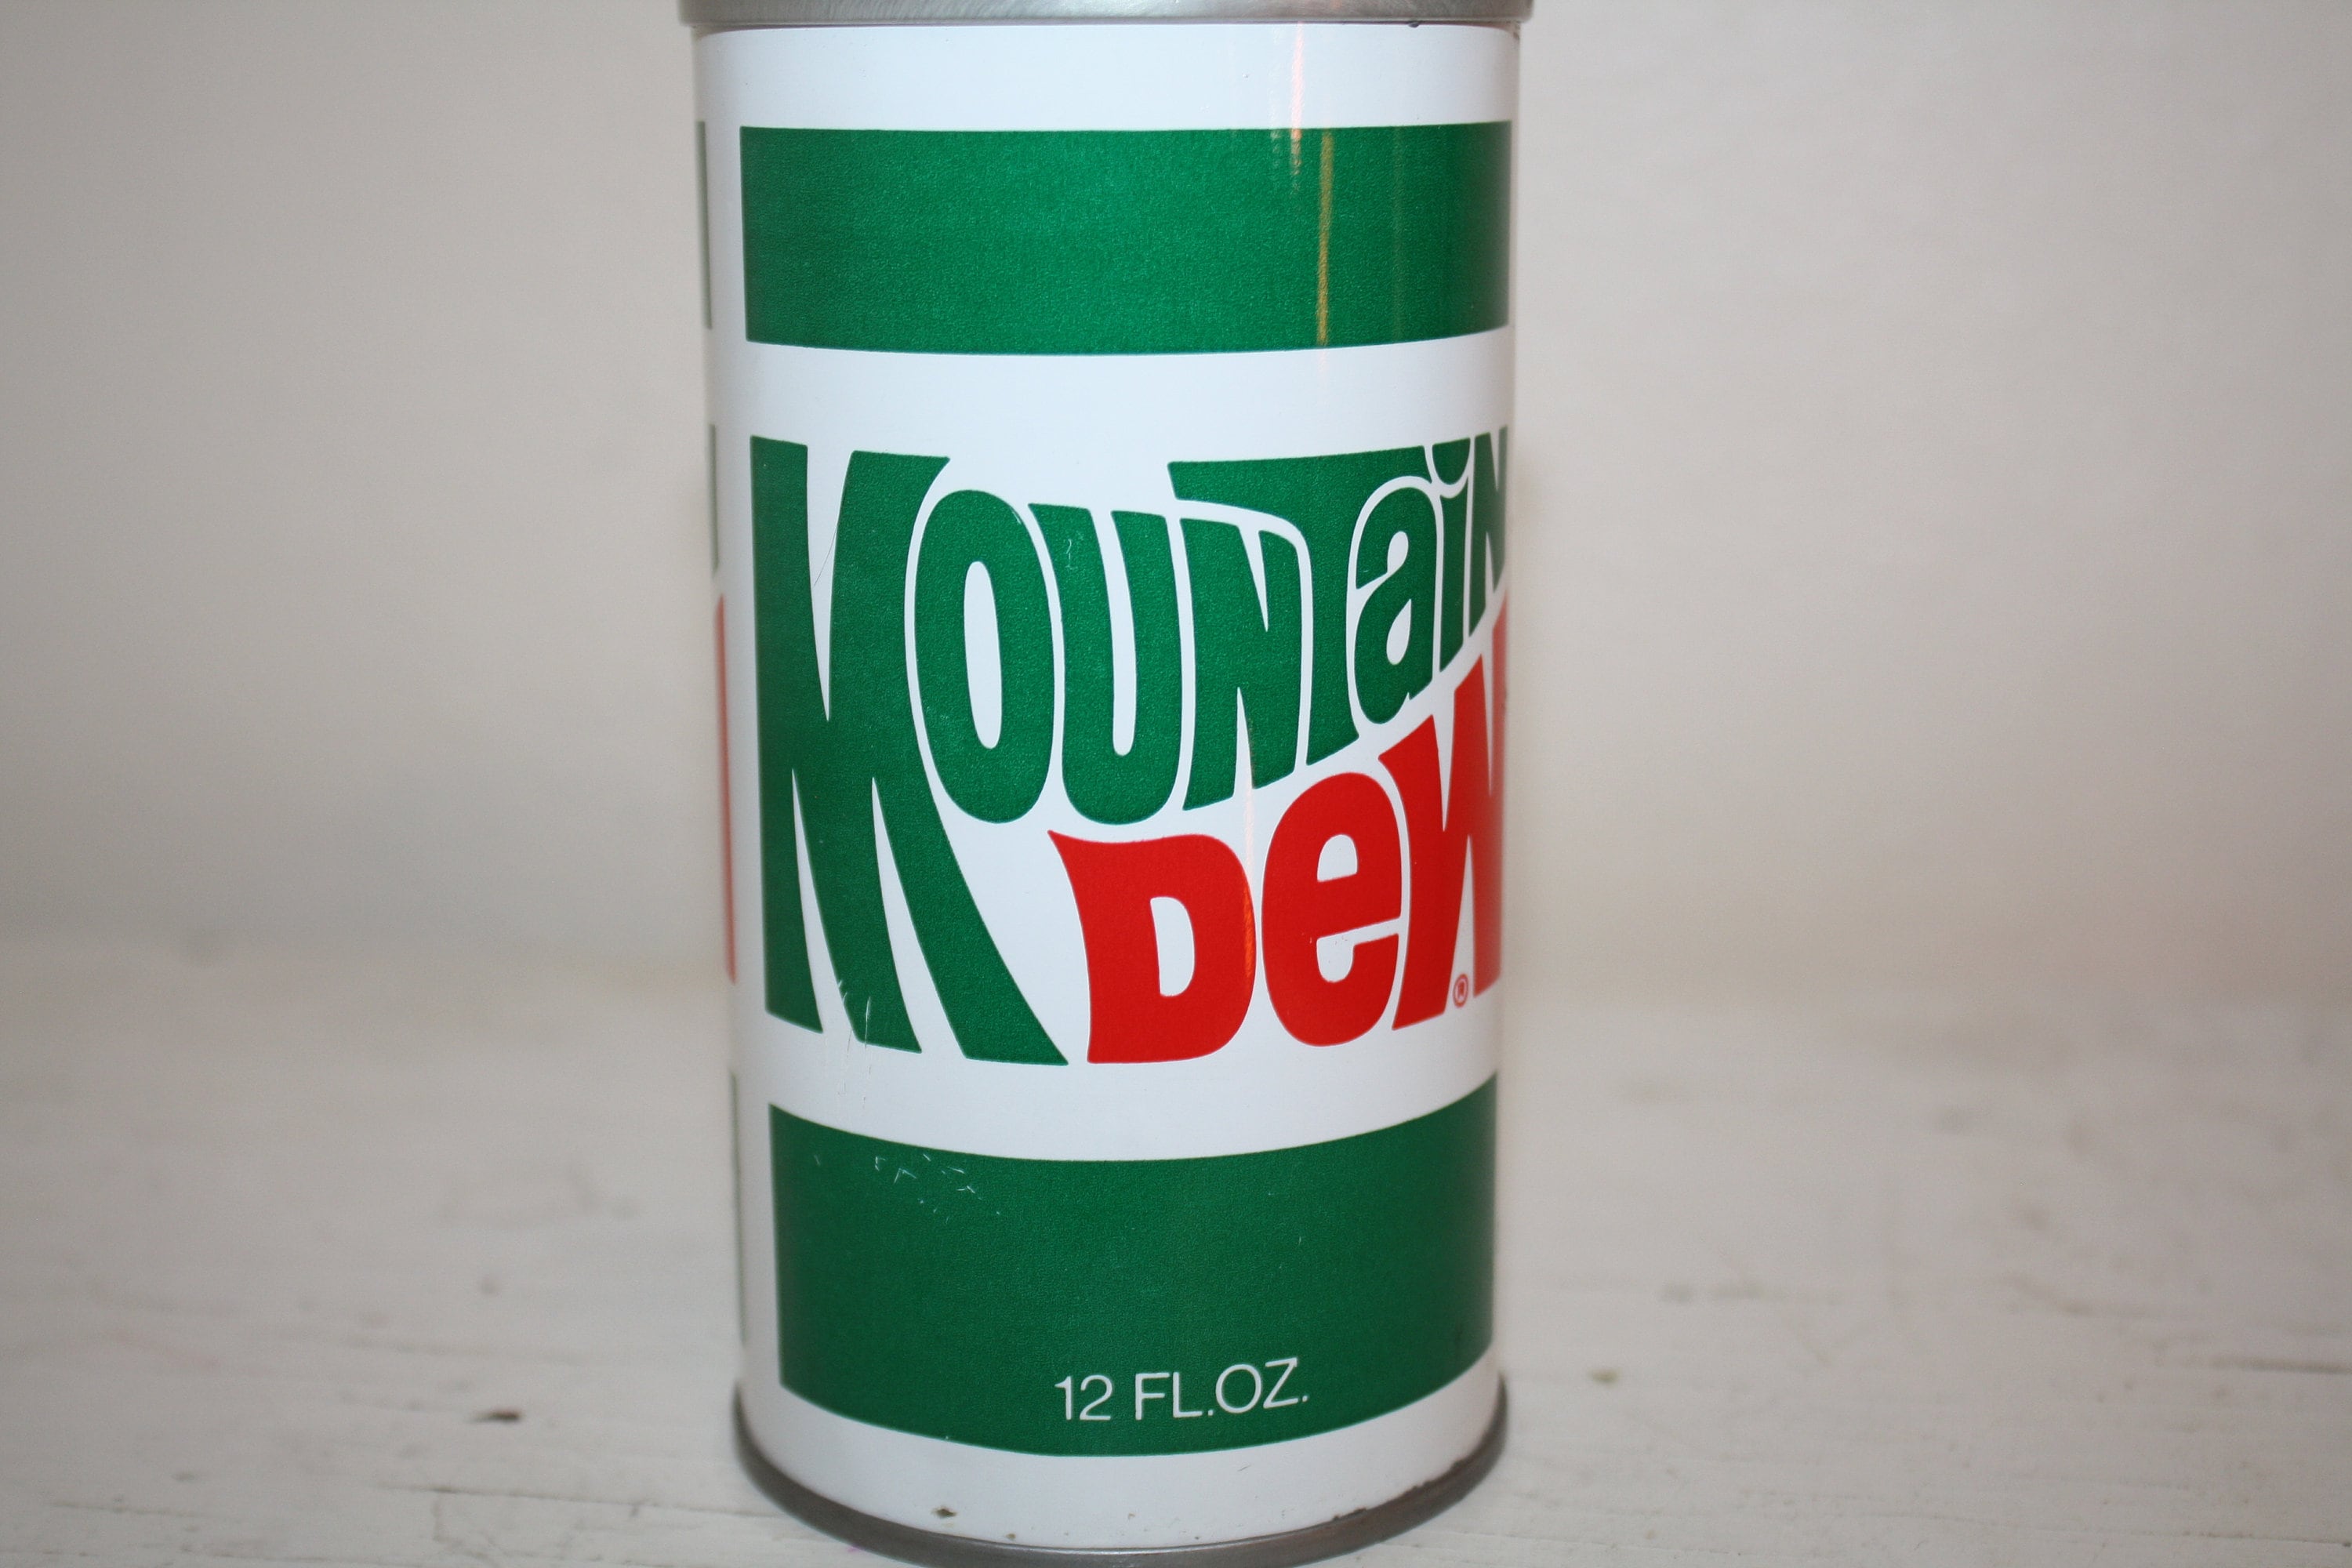 3 Longer Side Mountain Dew American Soft Drink Vinyl Sticker Art Decal Set of 3 Pieces 